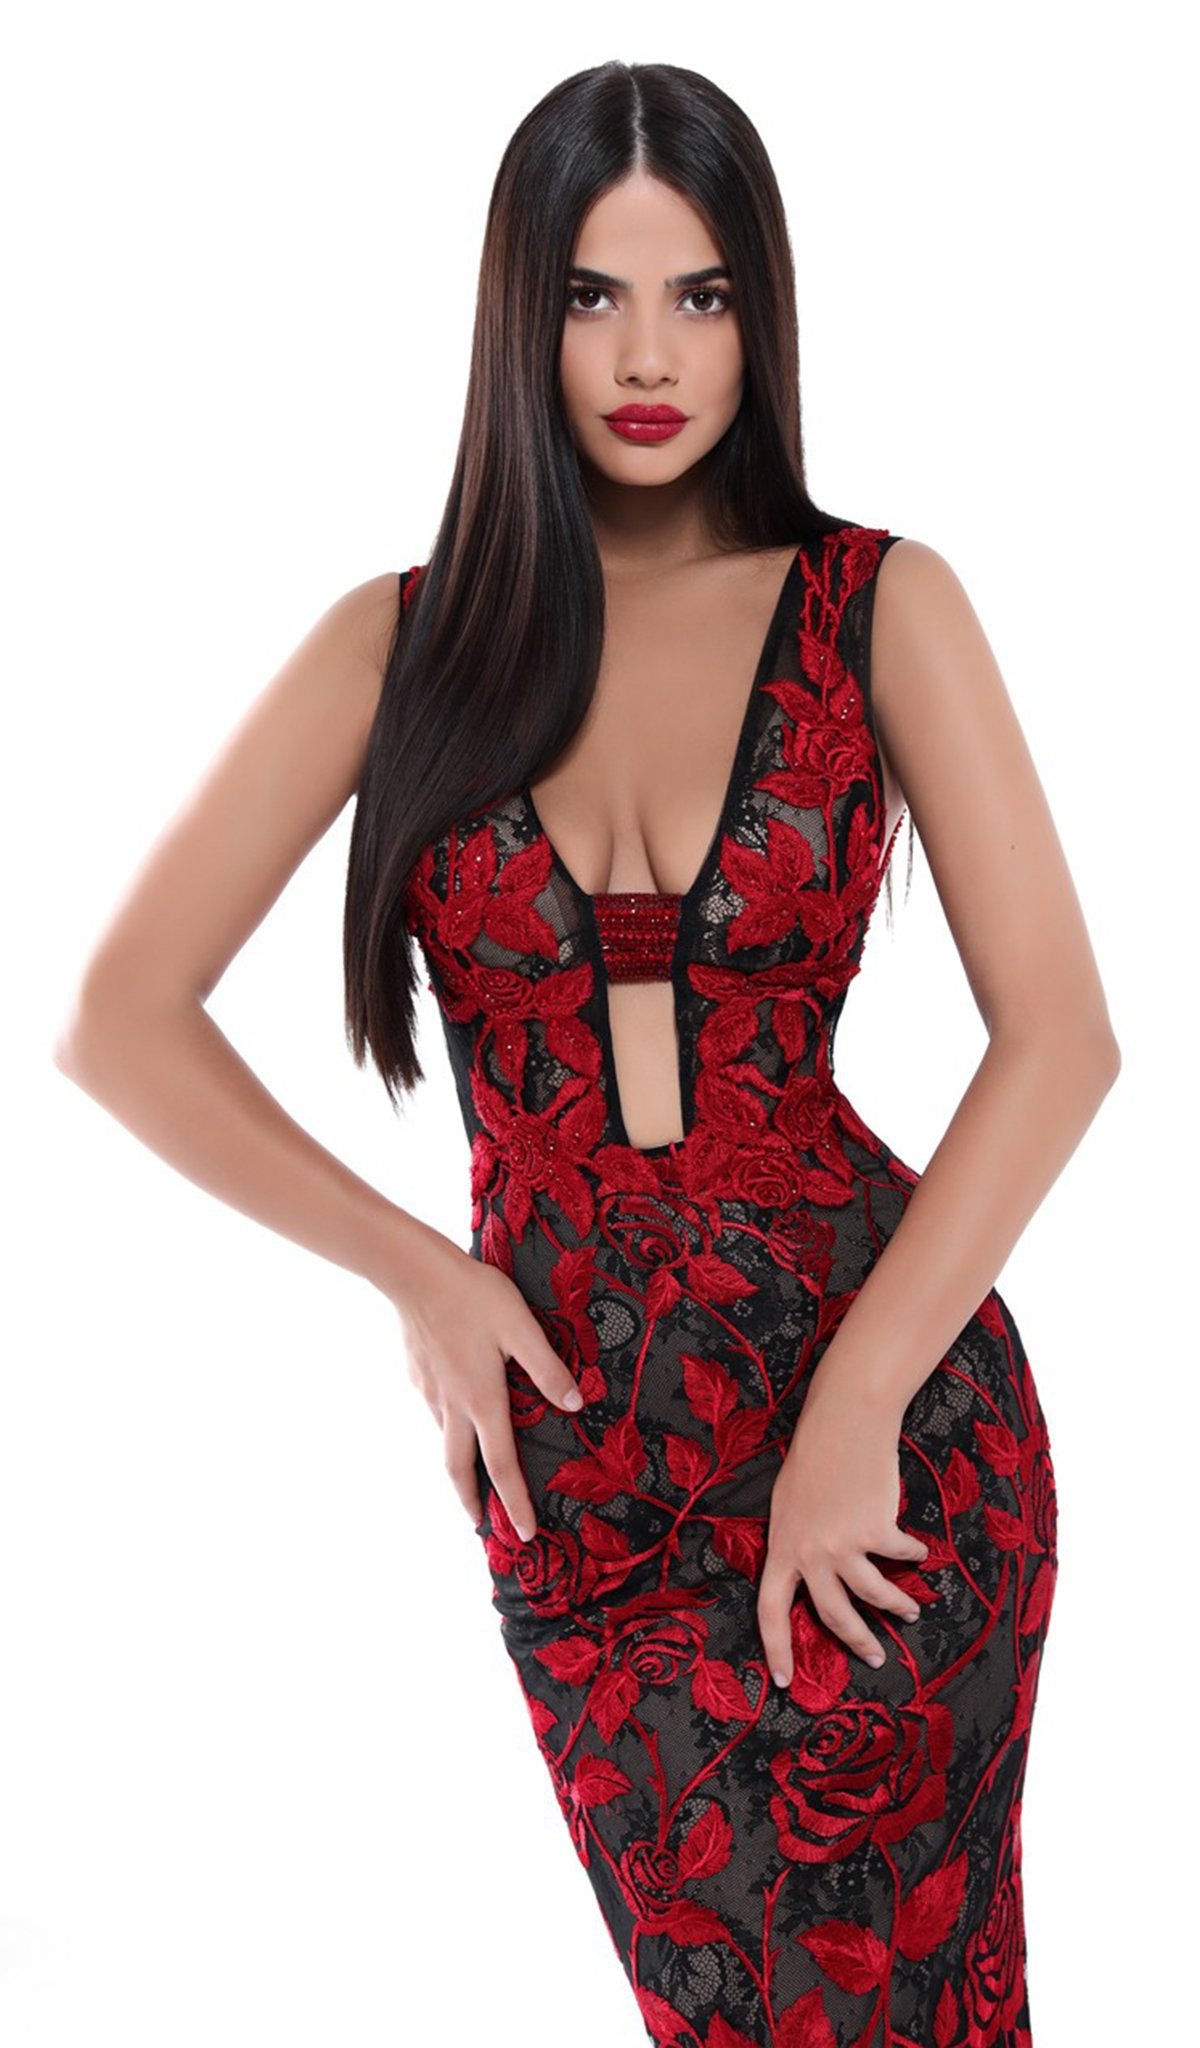 Tarik Ediz - 50502 Embellished Floral Lace Mermaid Dress In Black and Red